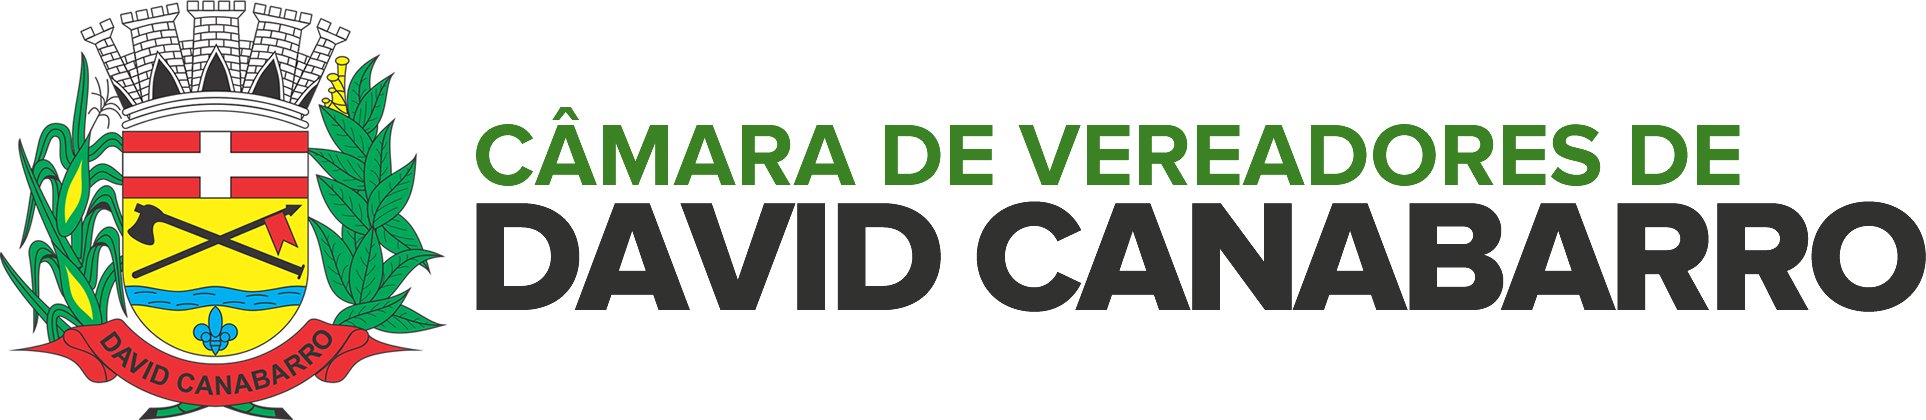 Logotipo da Câmara de David Canabarro